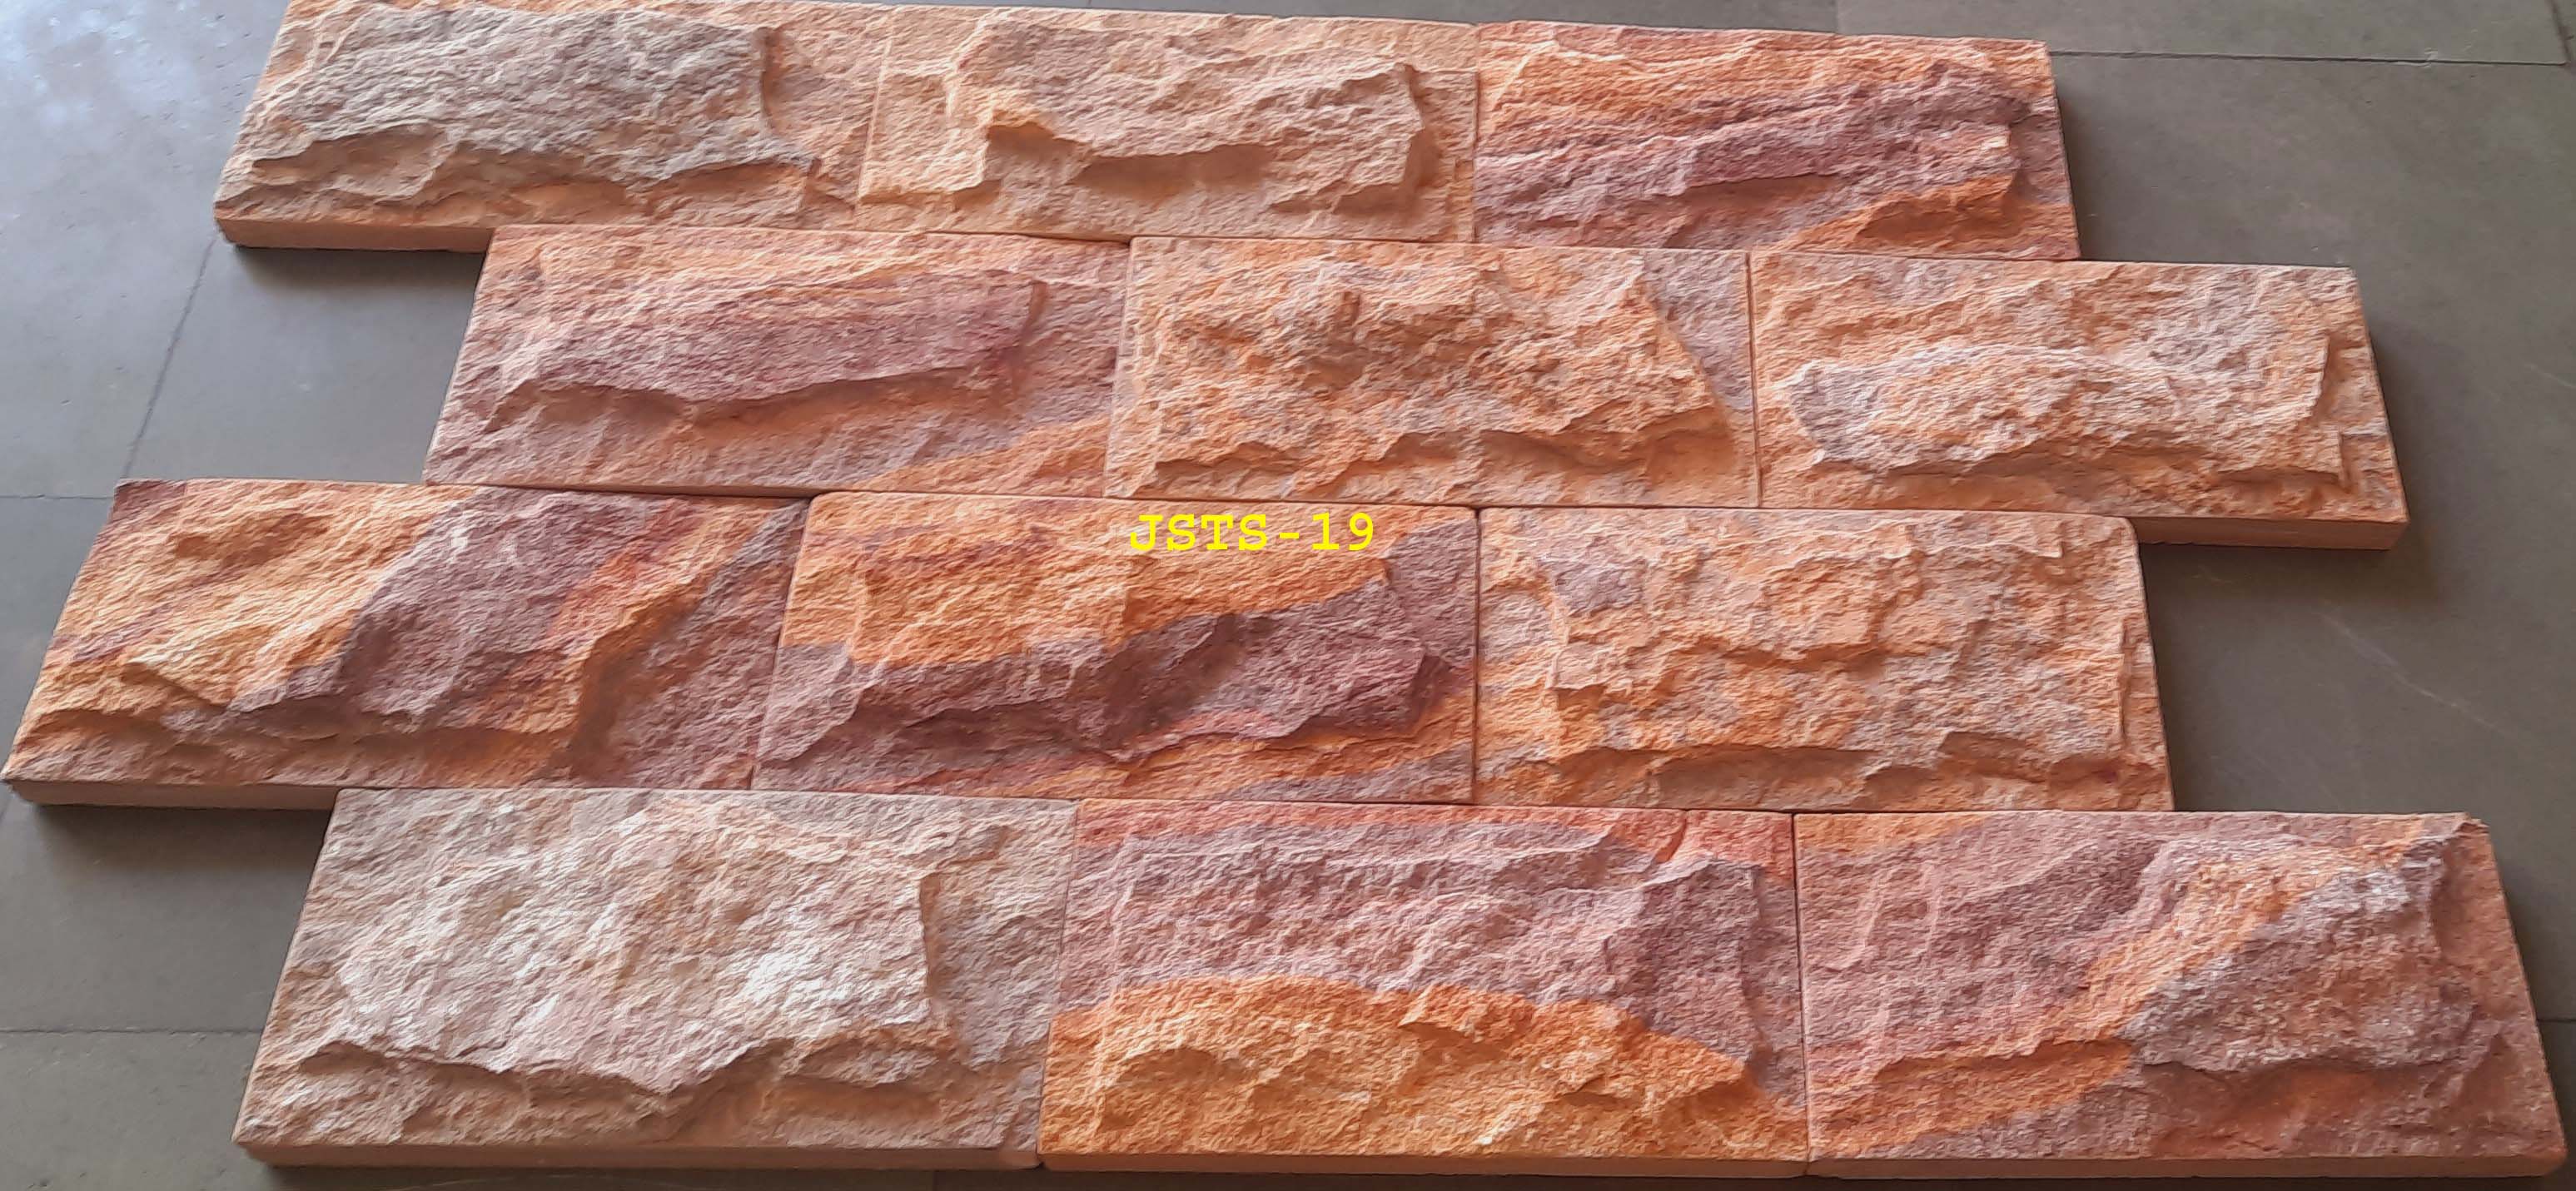 Stone Bricks For Boundary and Exterior Wall